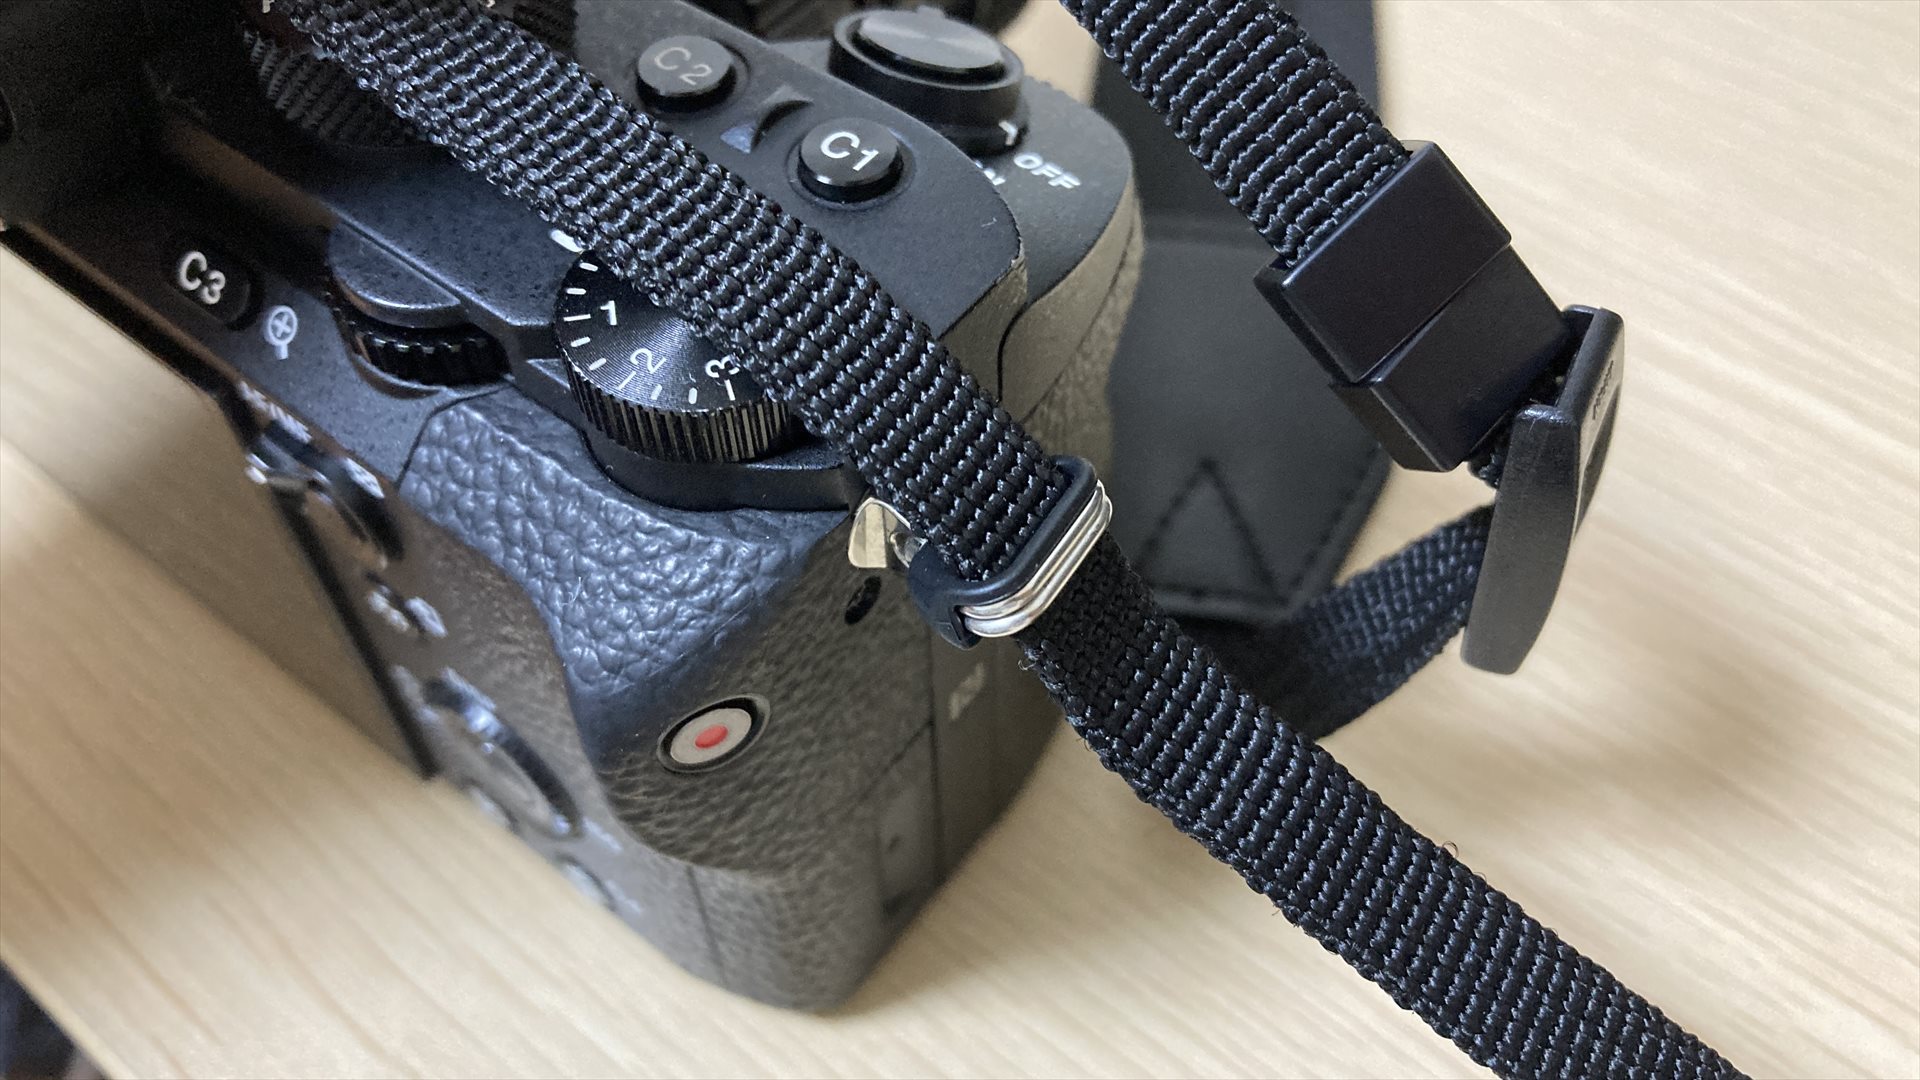 HAKUBAのカメラストラップ ルフトデザイン ツイルネックストラップ 38 一眼レフ用 KST-65T38。α7riiのカメラストラップの取り付け穴幅はちょうど10mmで、このHAKUBAのストラップがピッタリでした。